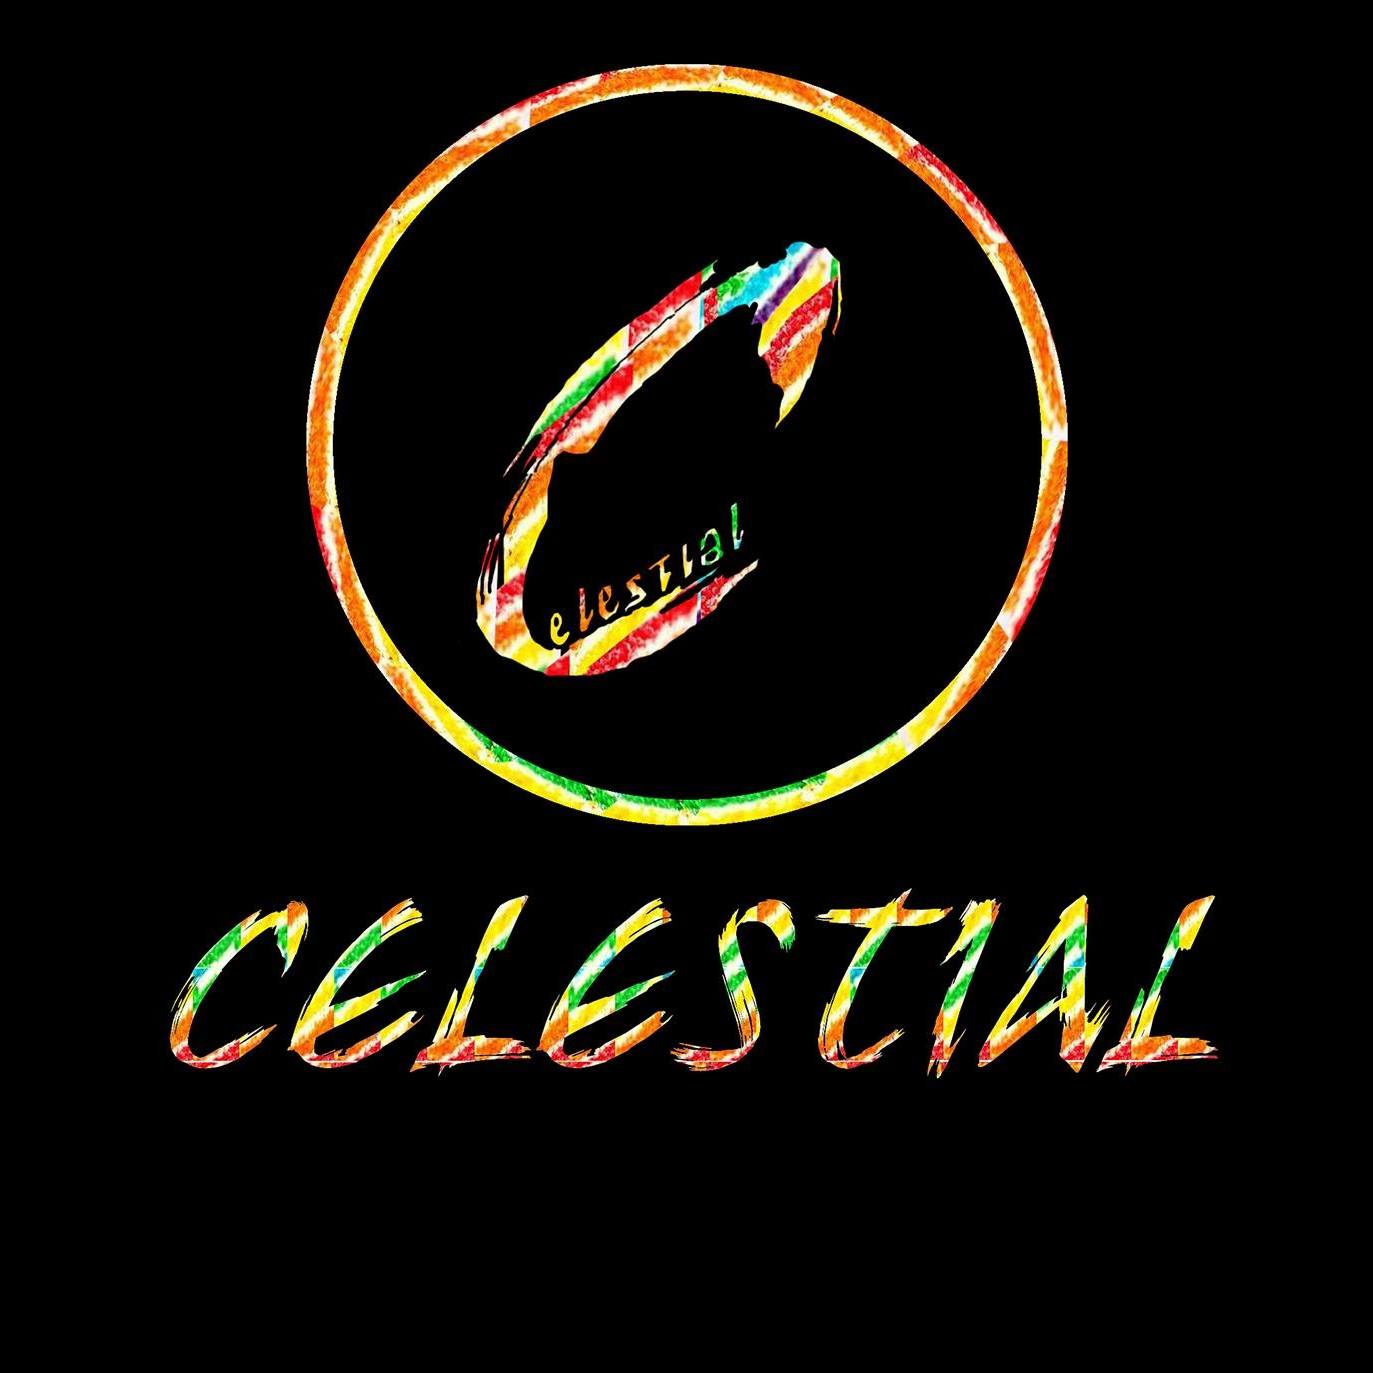 Celestial BD